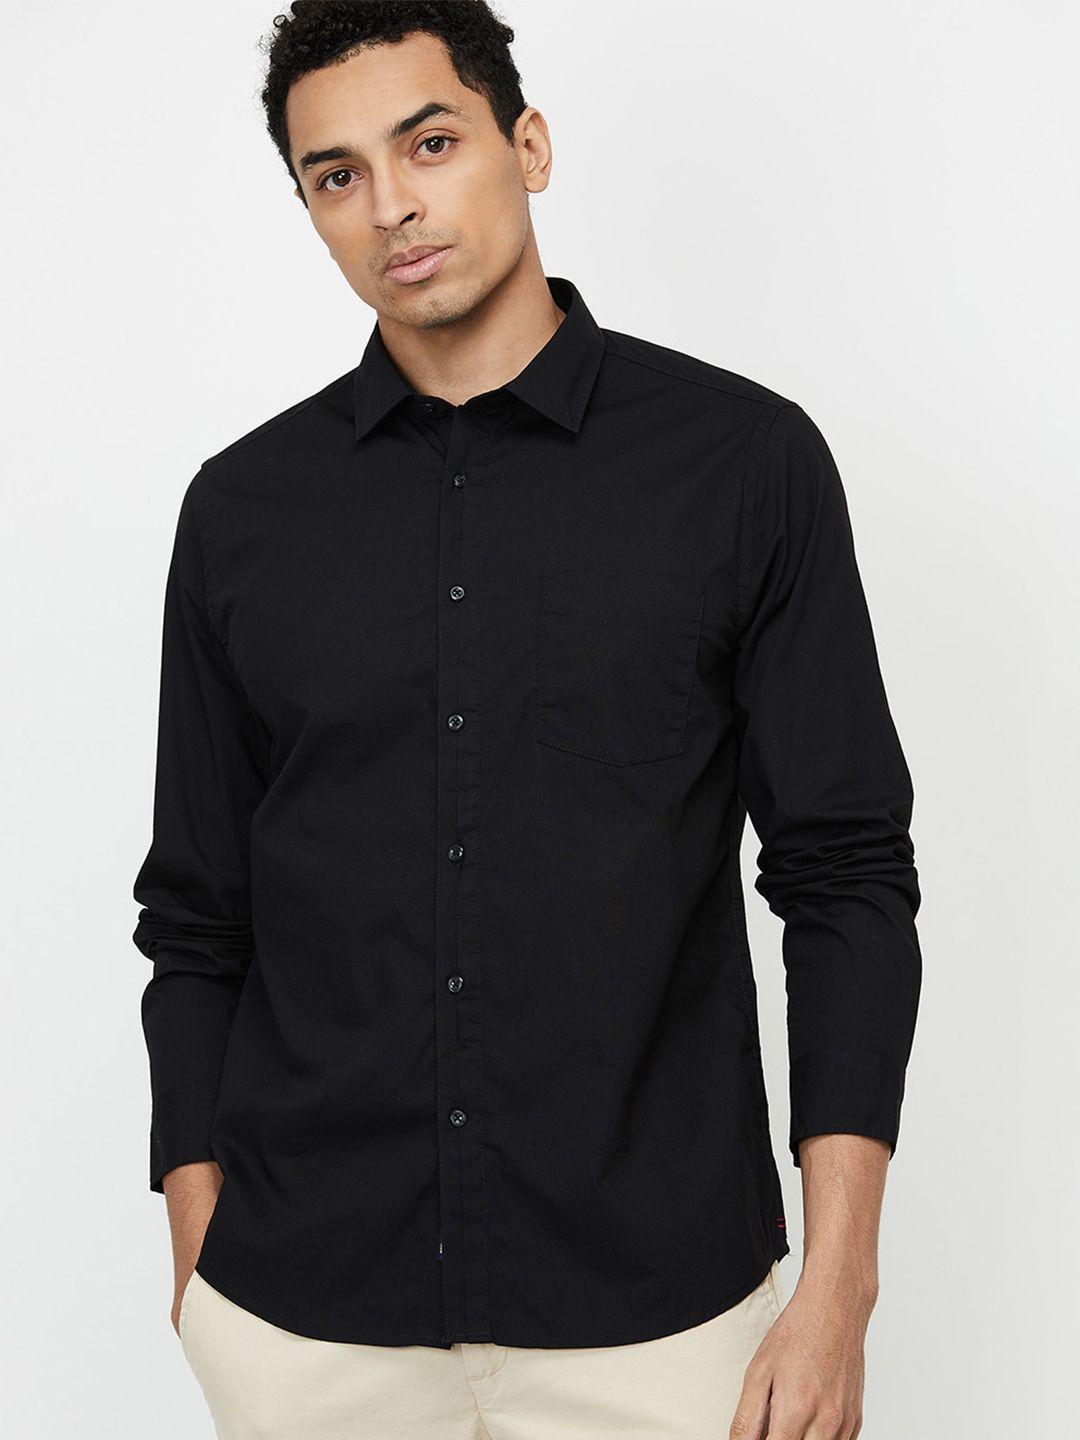 max men black casual shirt